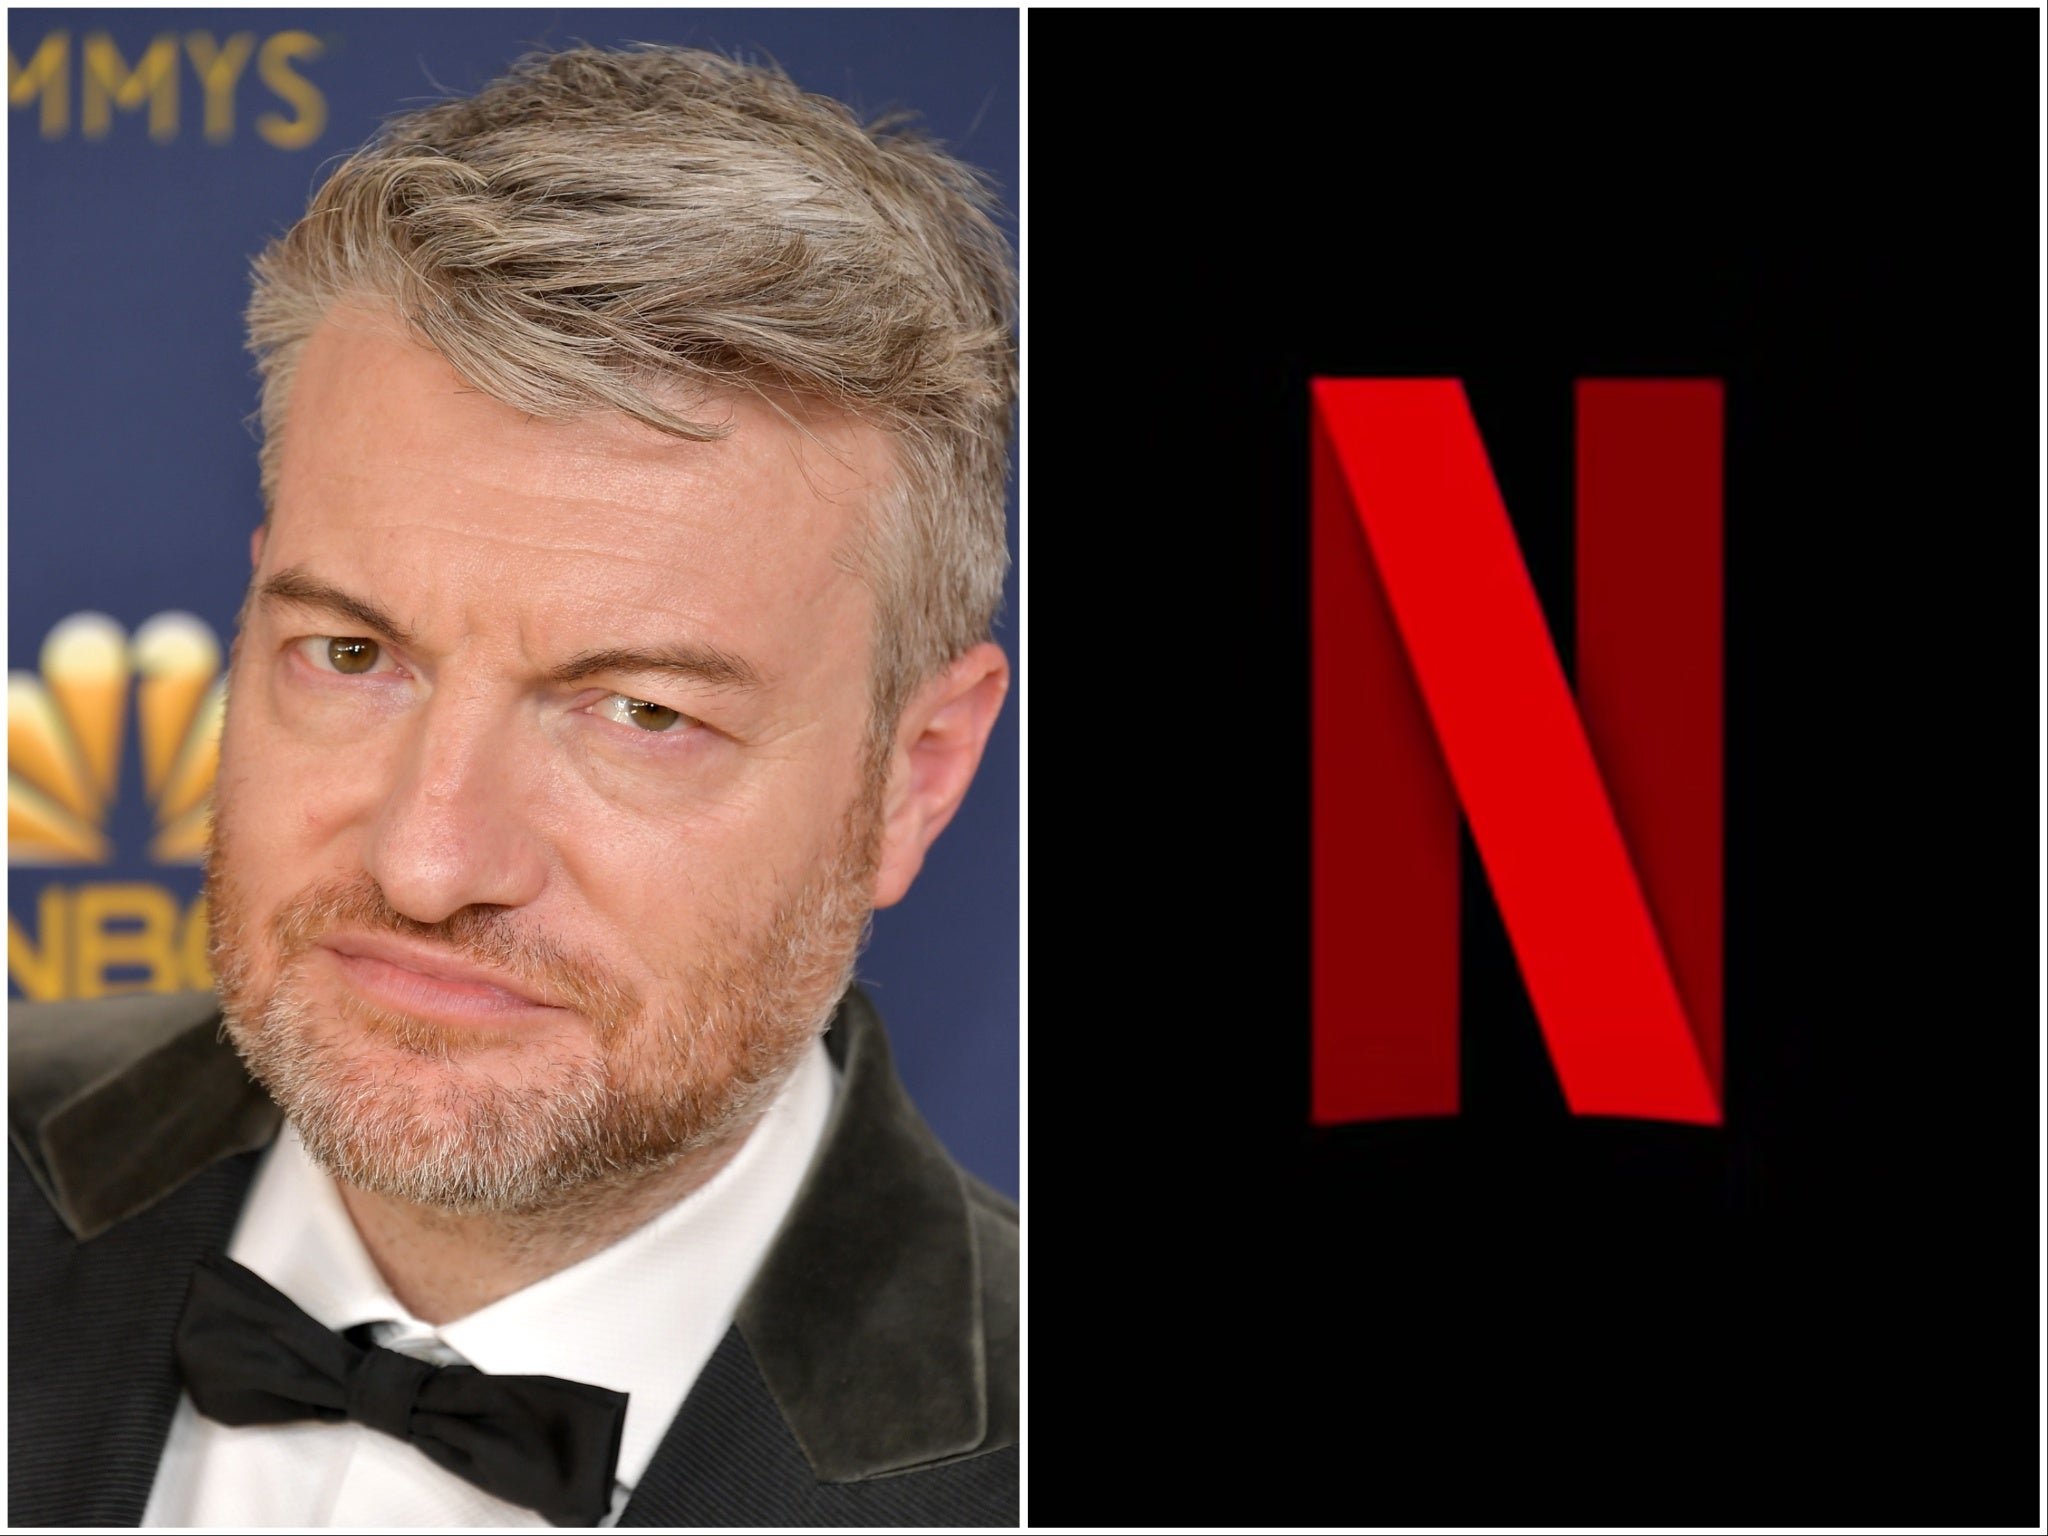 Black Mirror creator Charlie Brooker, and the Netflix logo